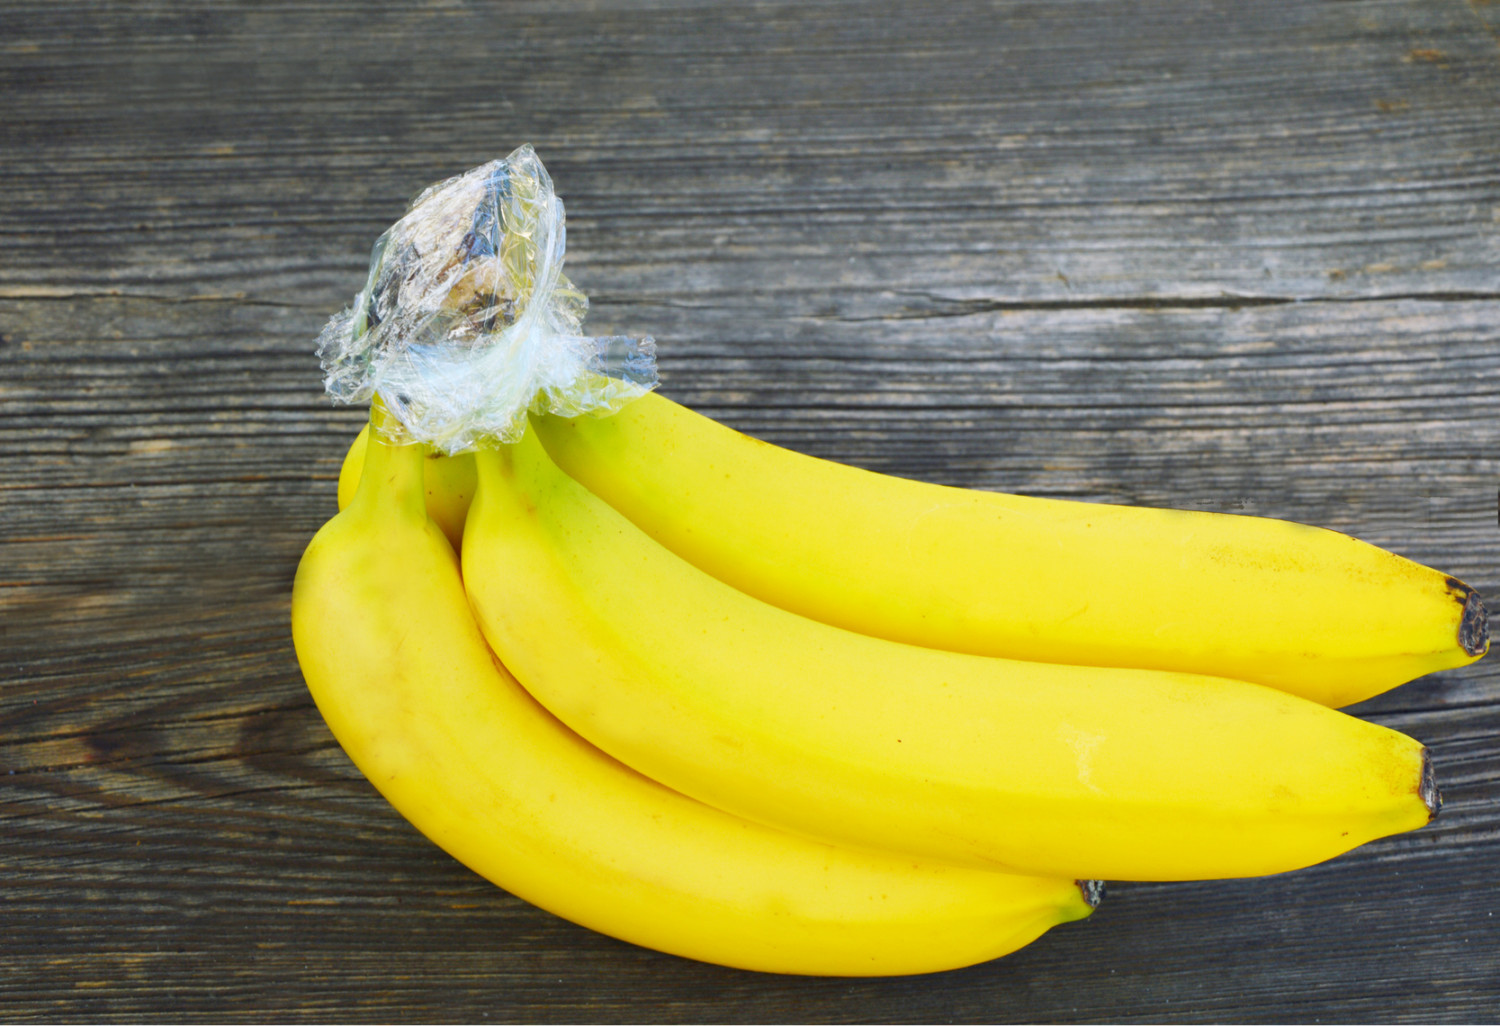 How to keep Bananas fresh longer